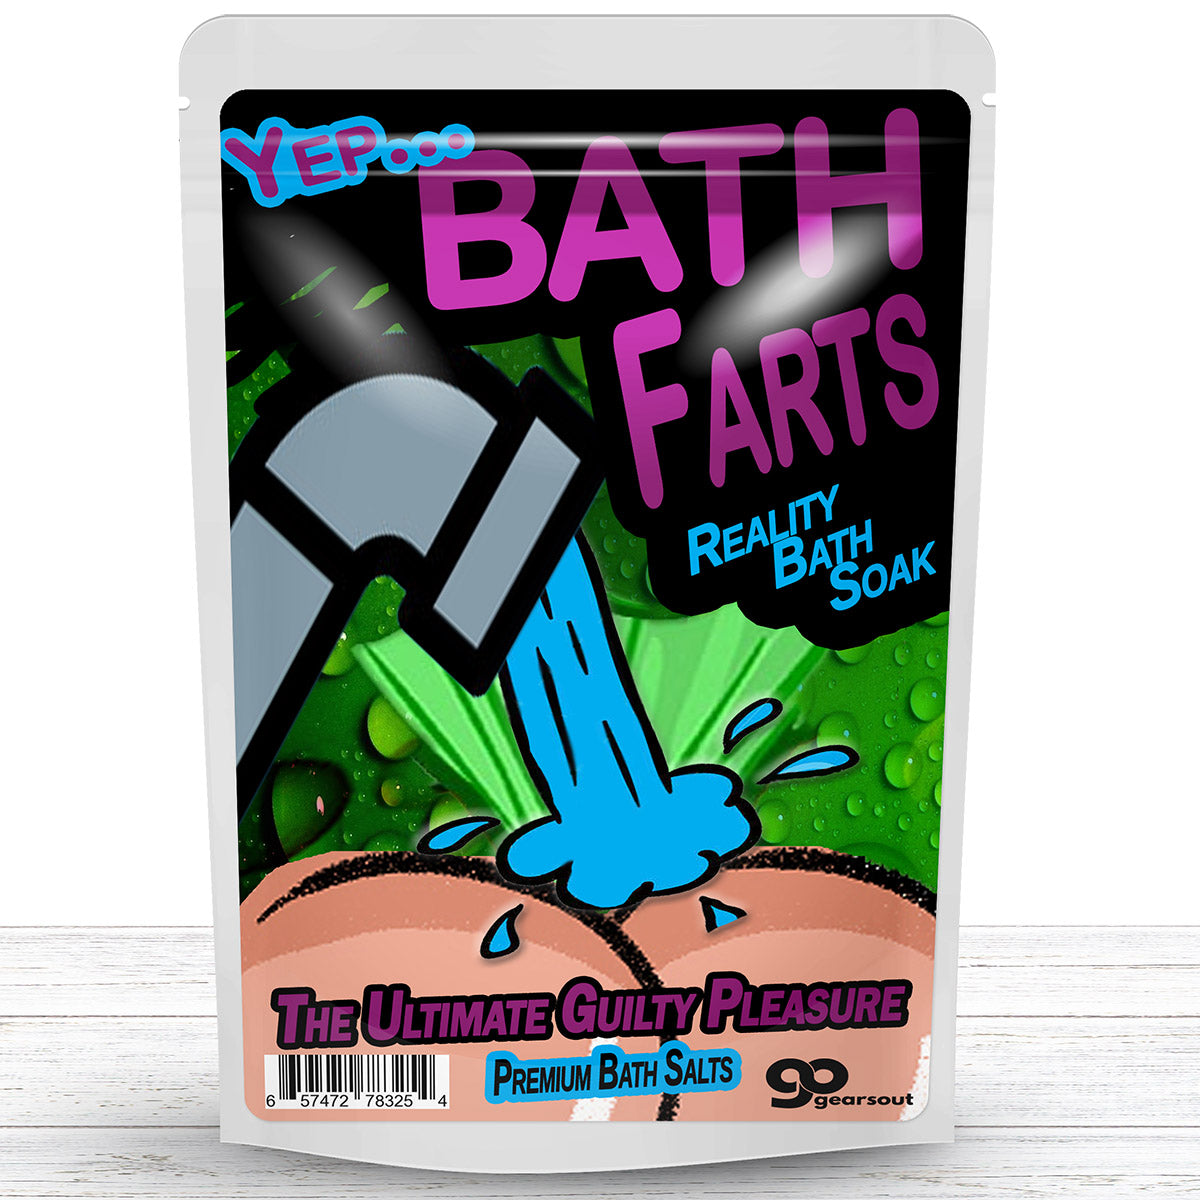 Bath Farts Reality Bath Soak